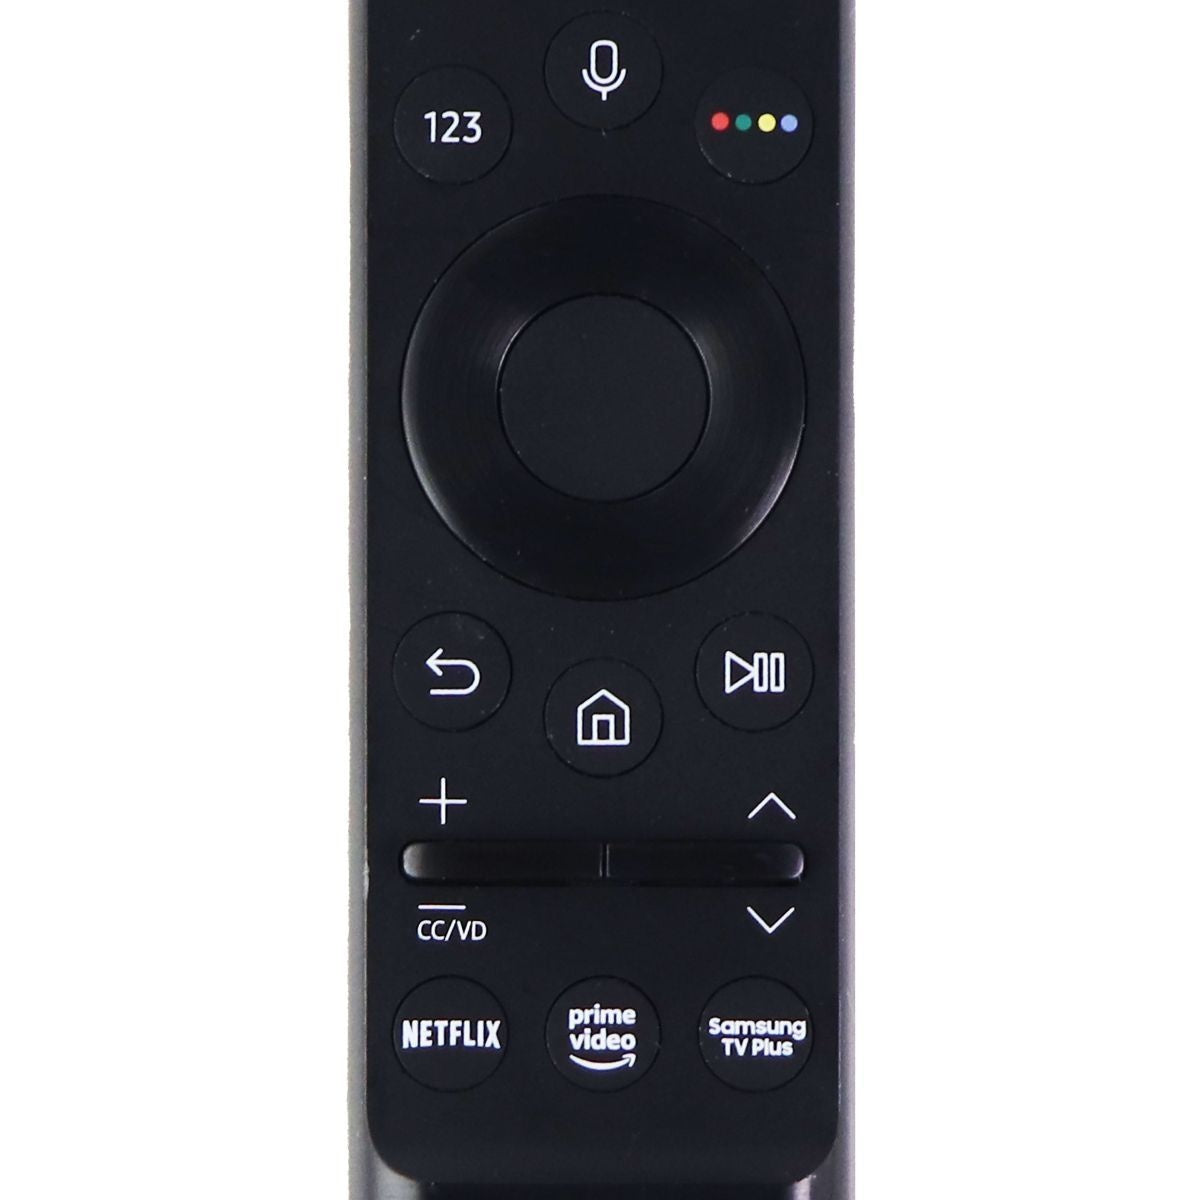 Samsung Remote Control (BN59-01363A) for Select Samsung TVs - Black